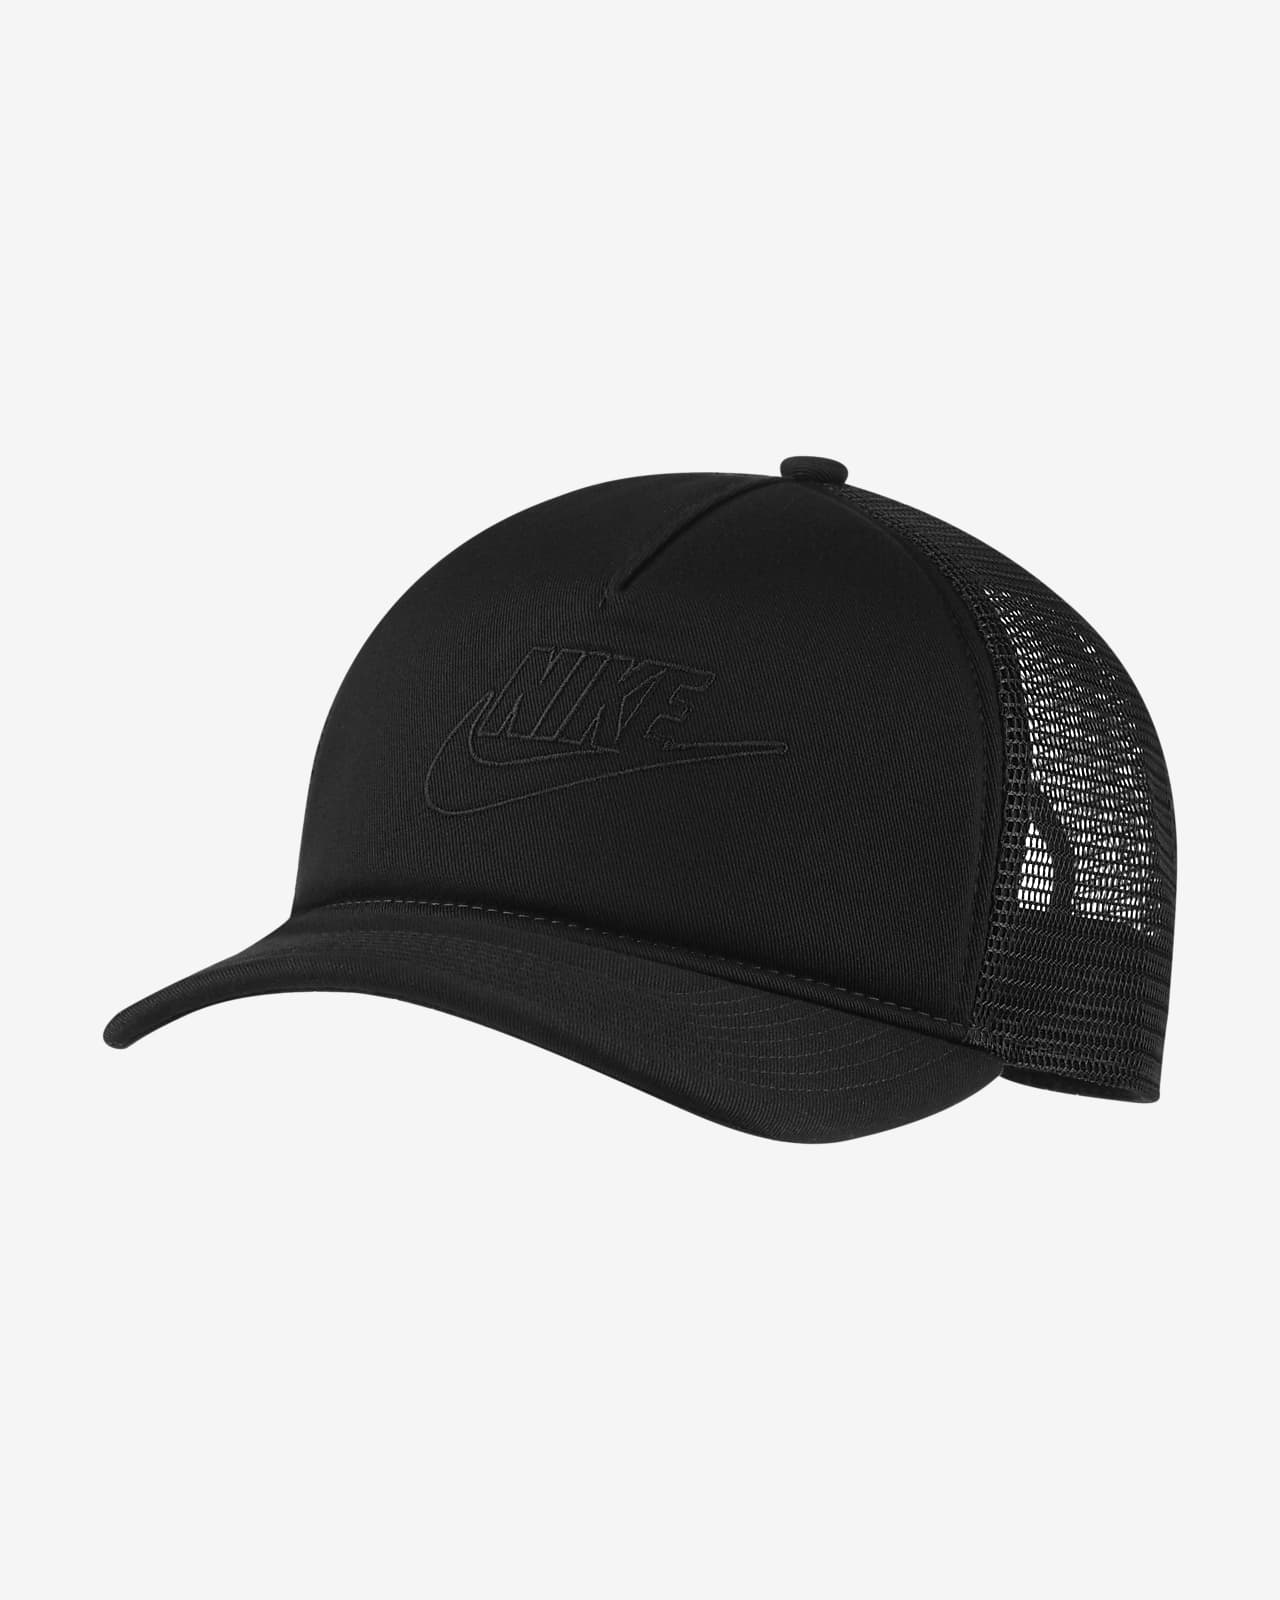 Nike Sportswear Classic 99 嘻哈帽